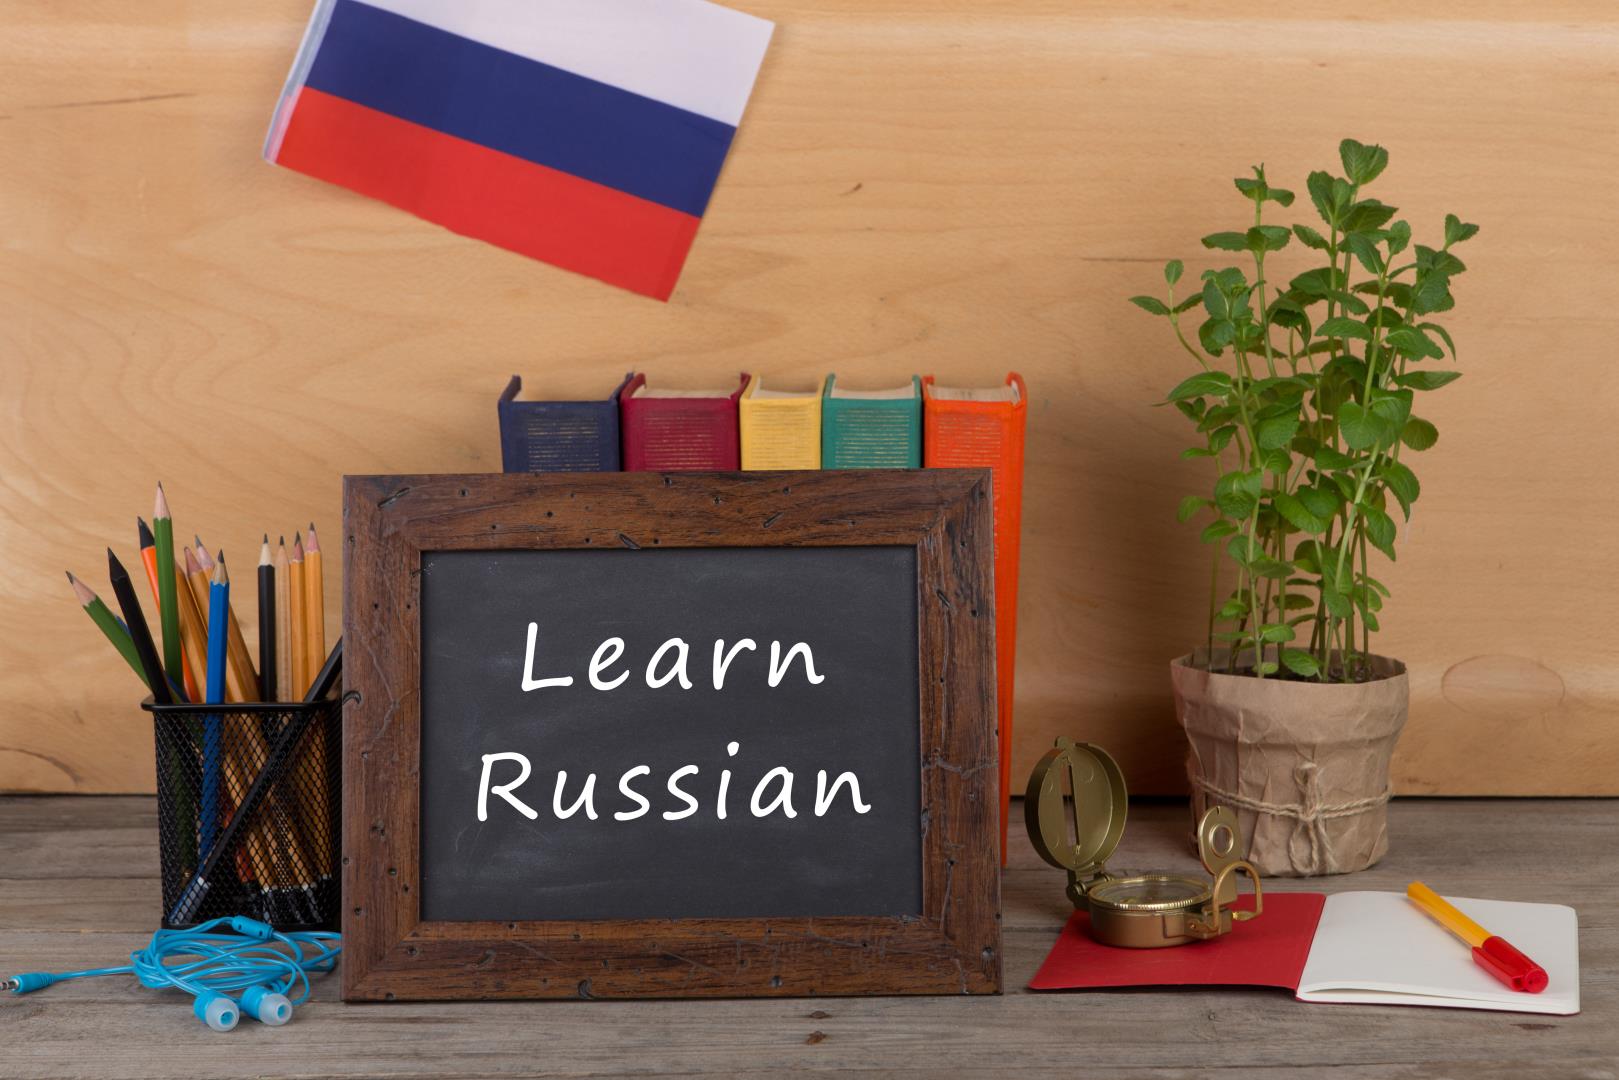 Learning Russian language